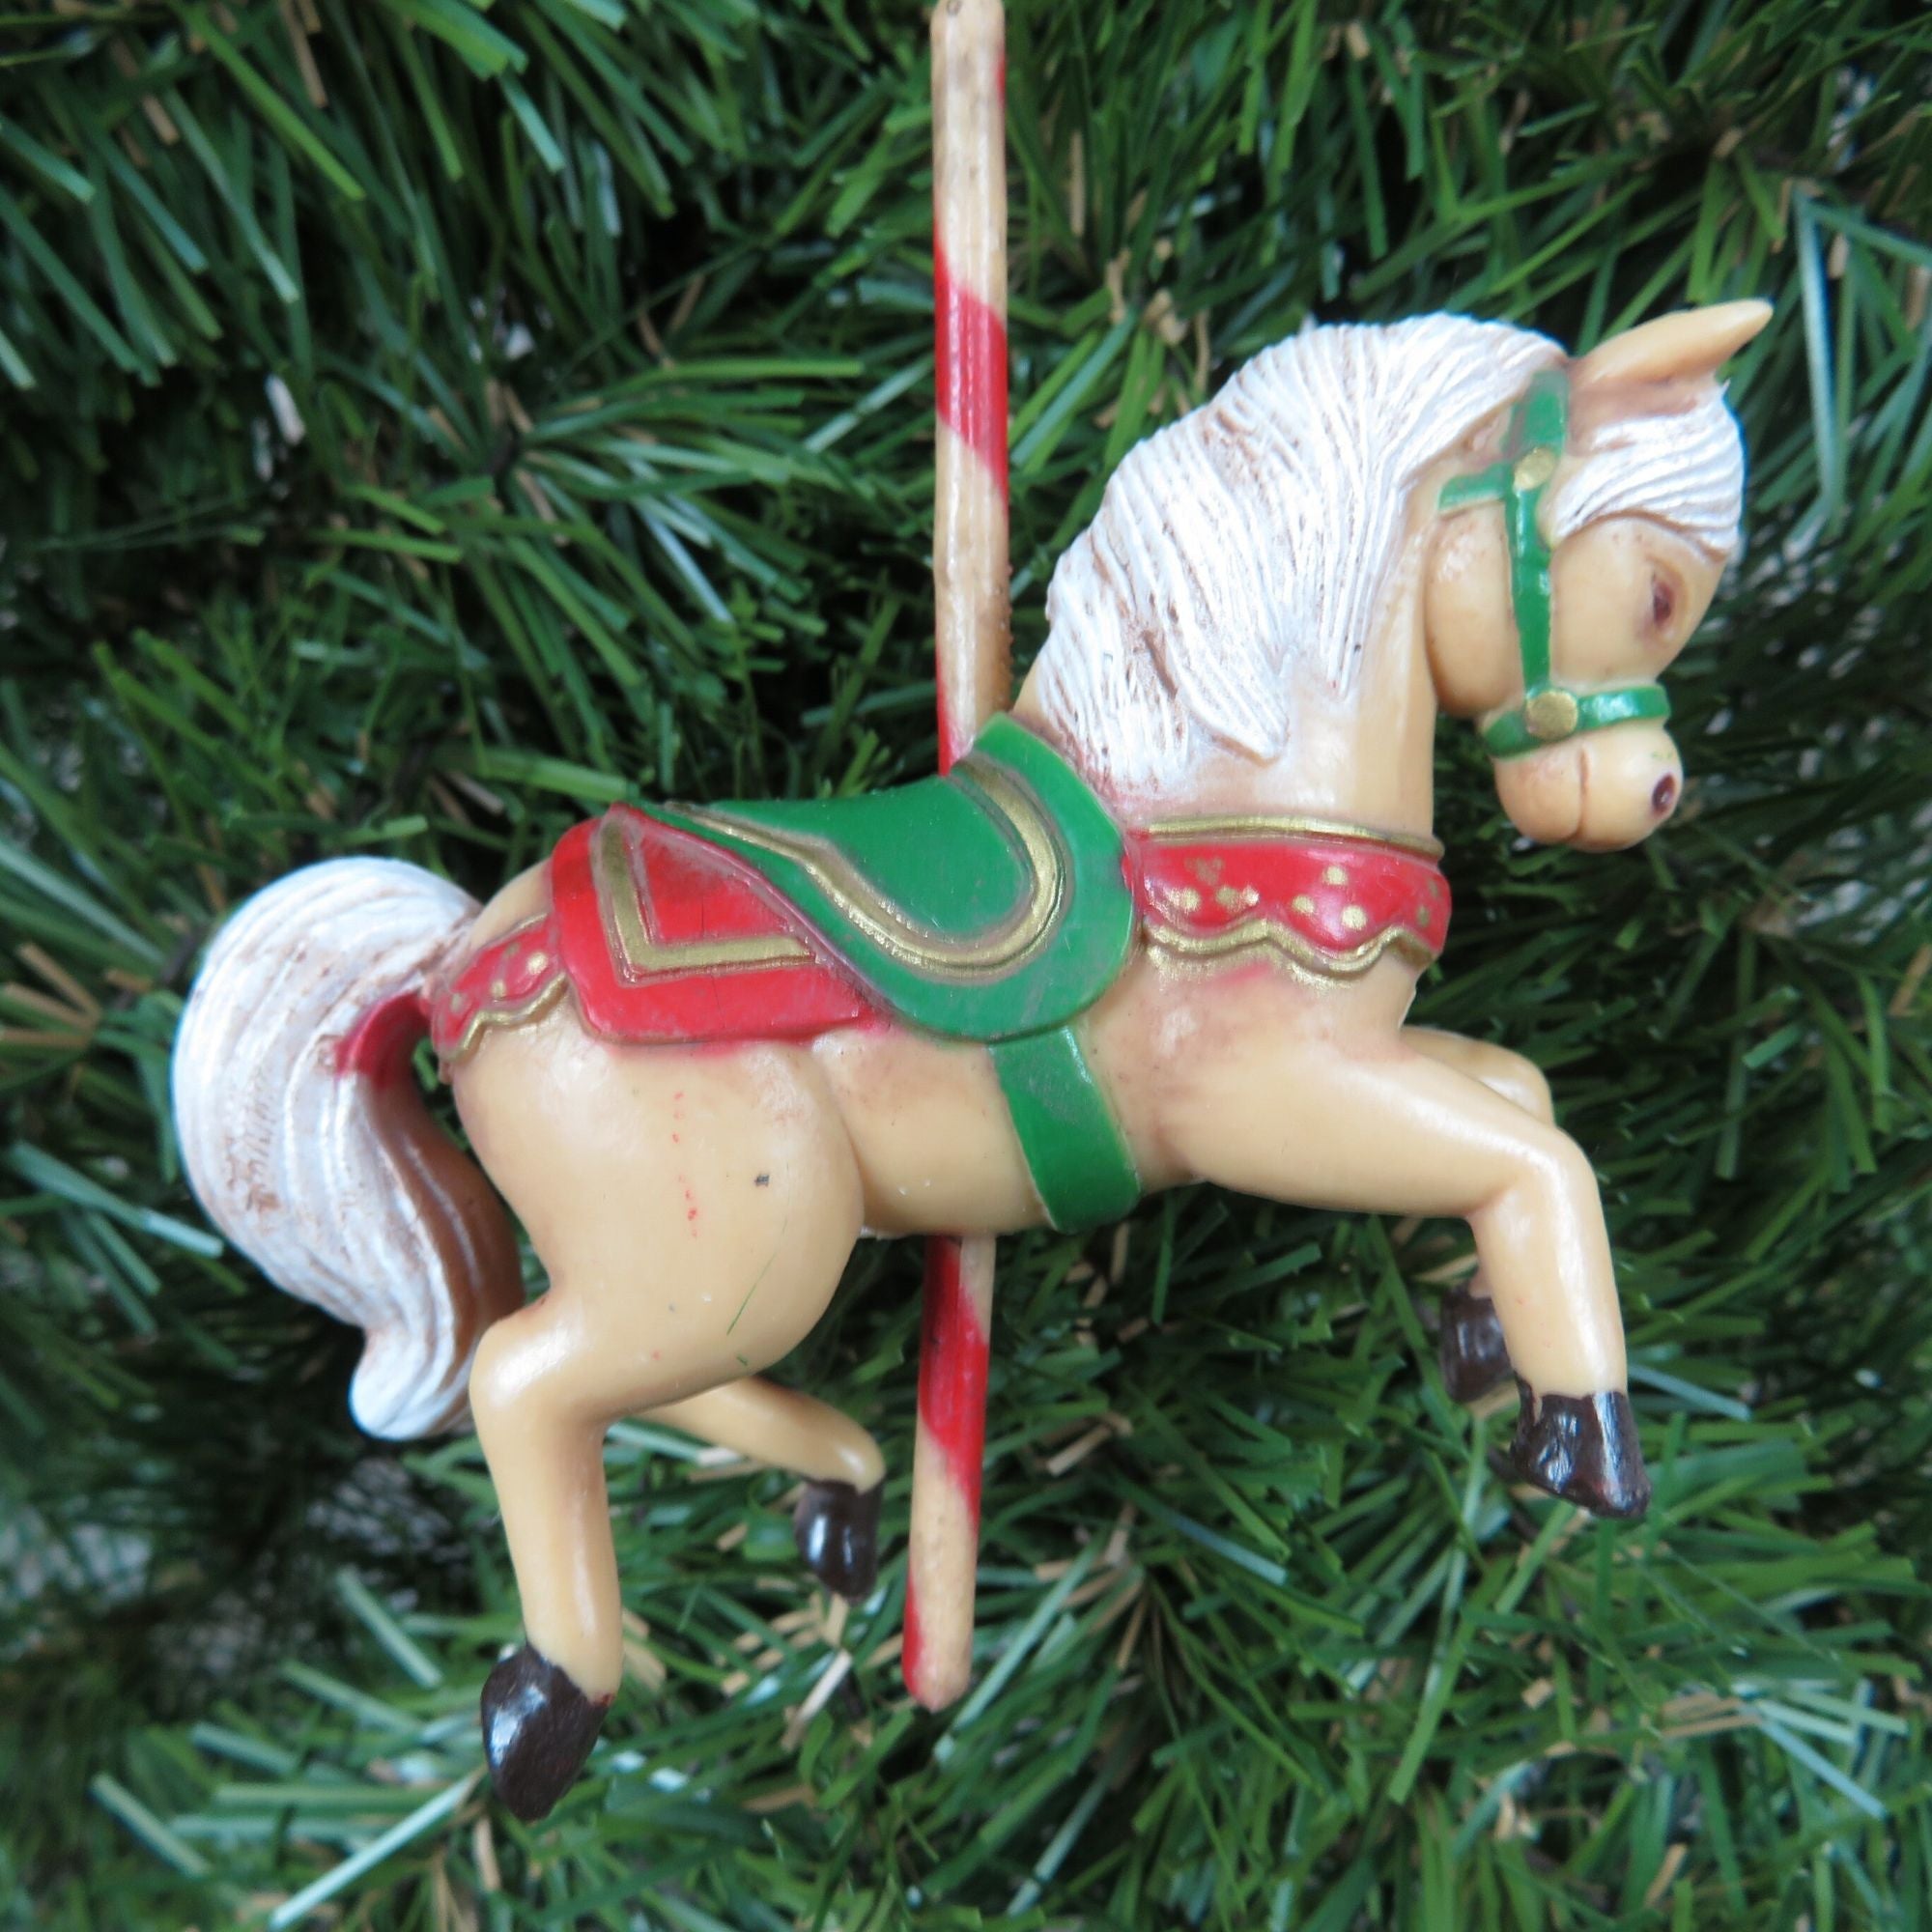 Carousel Horse Christmas Ornaments